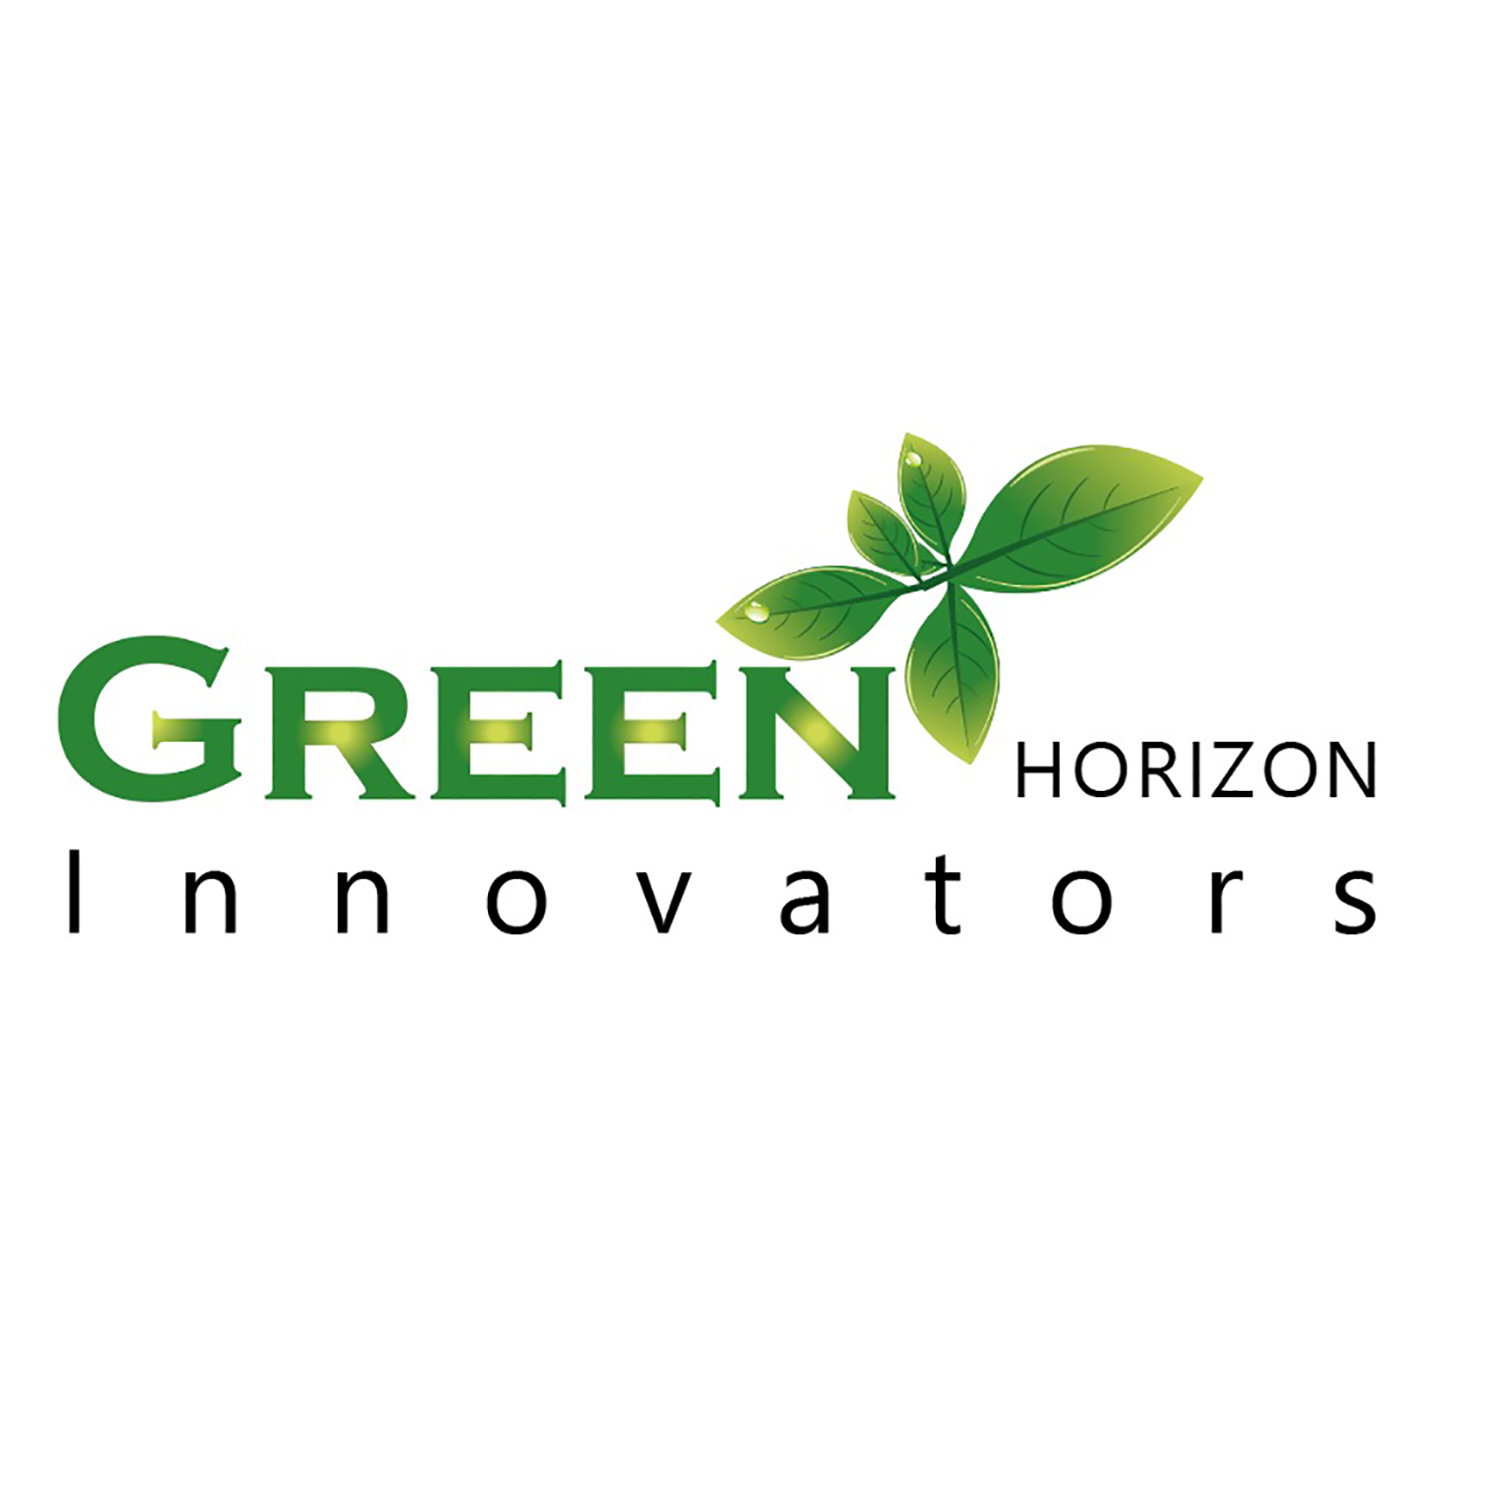 Green Horizon Innovators